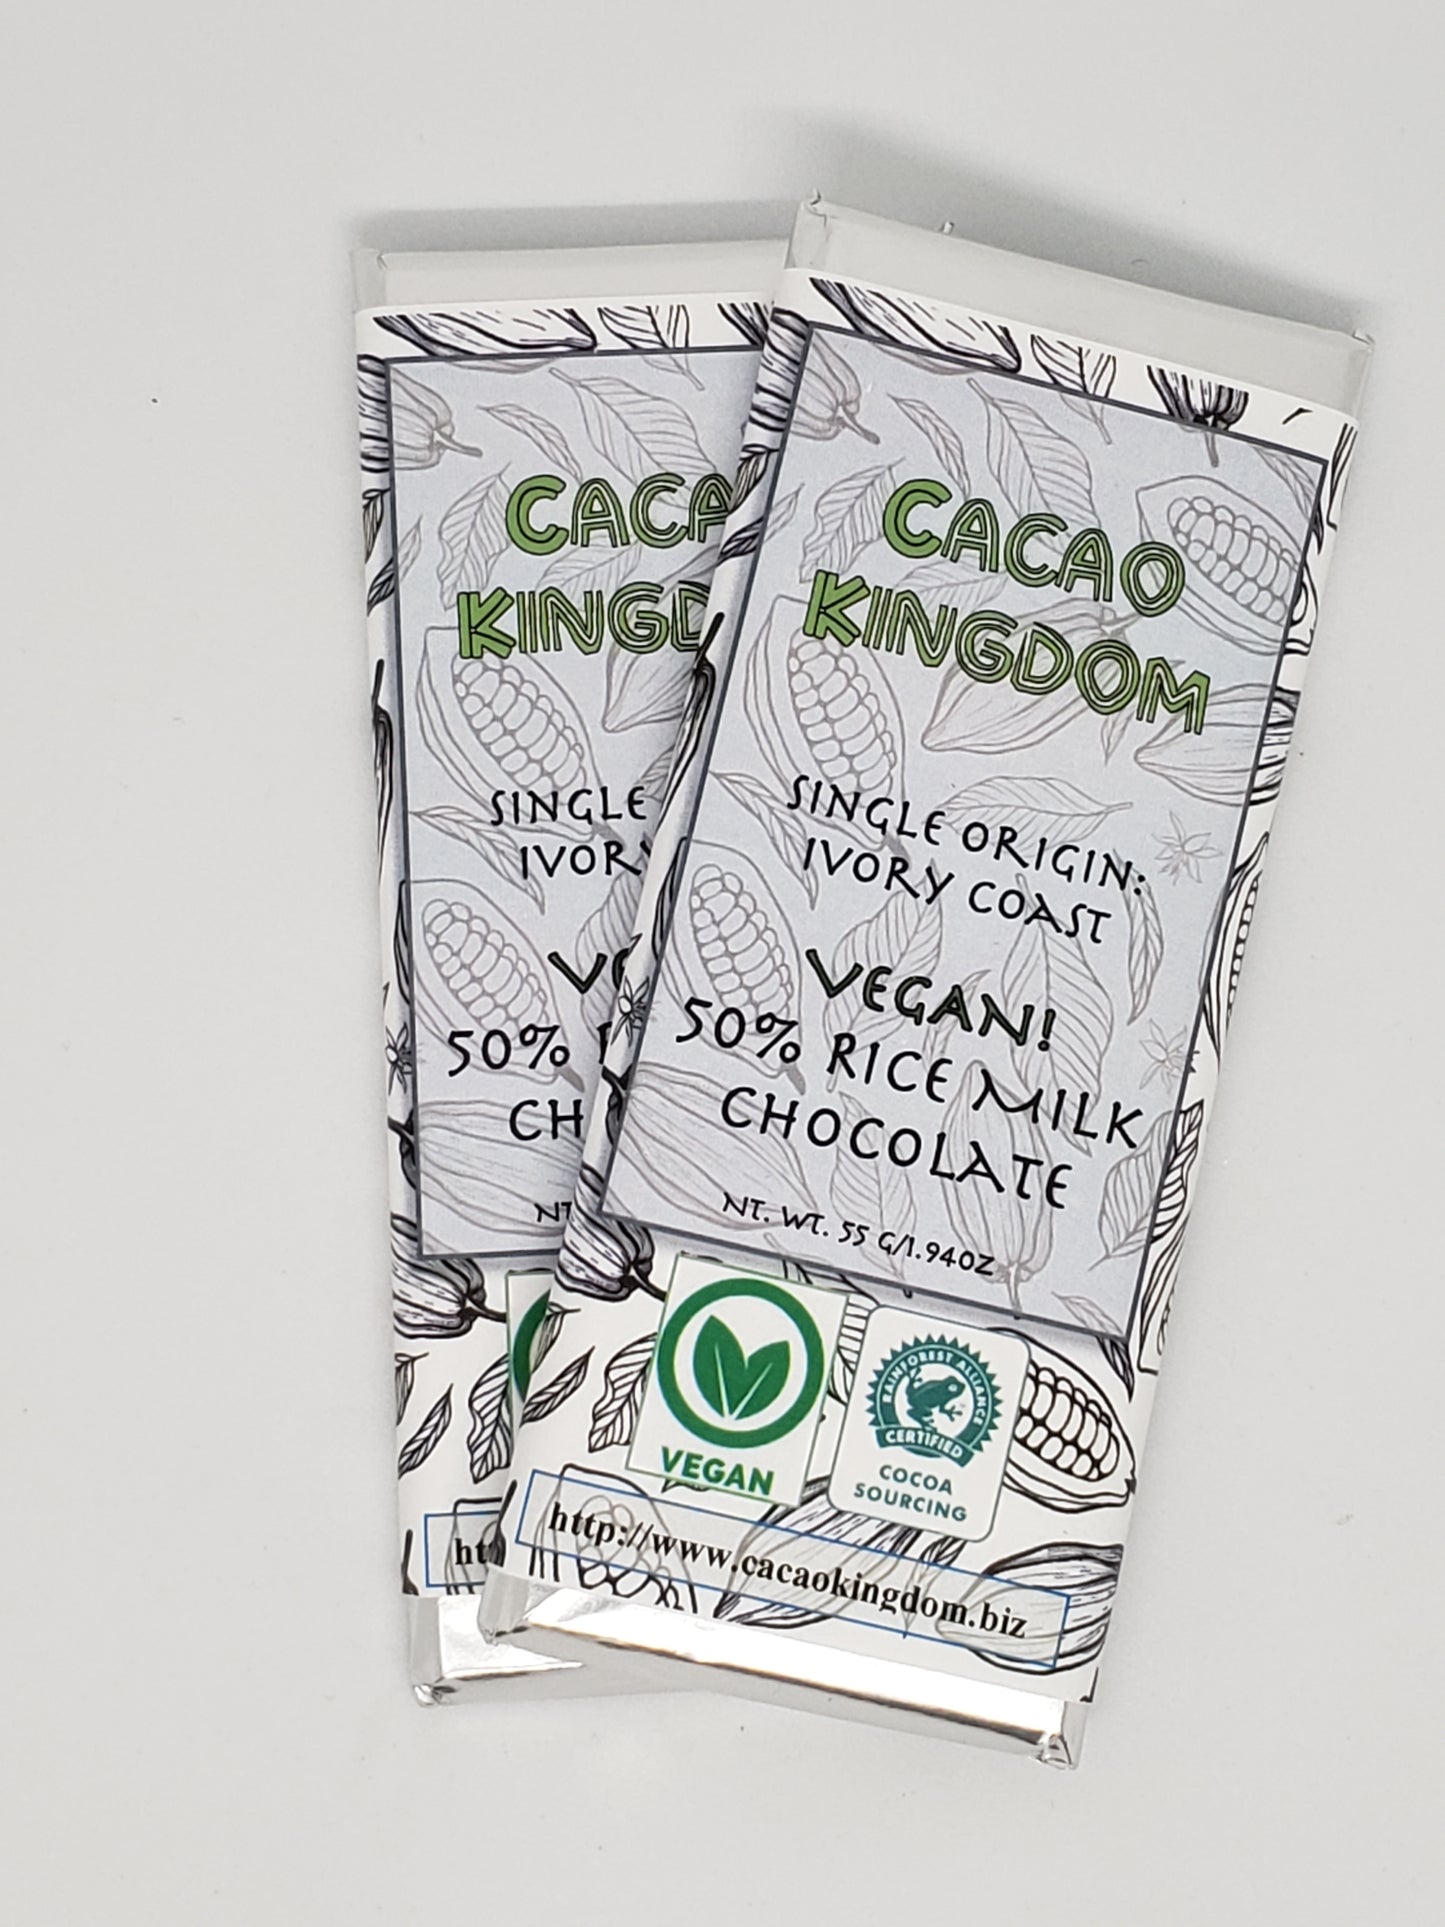 50% Vegan Ivory Coast Rice Milk Chocolate